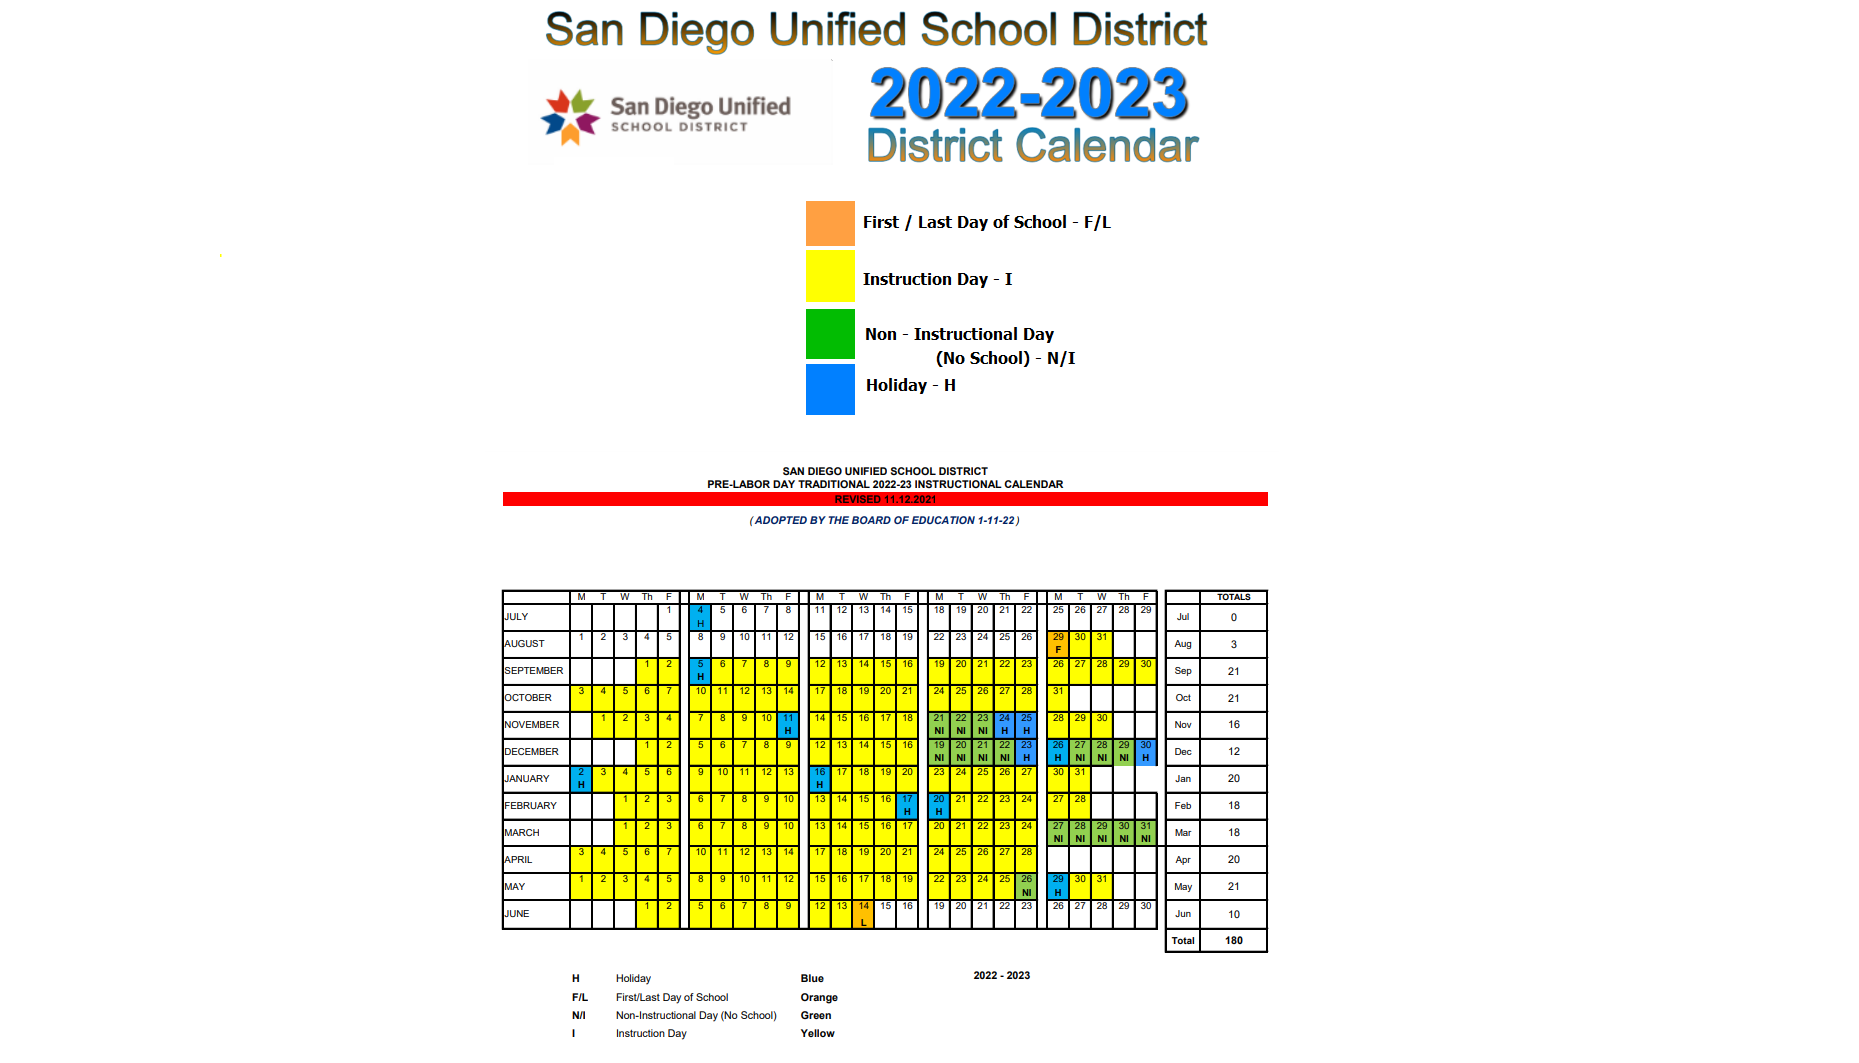 District School Academic Calendar Key for Charter School Of San Diego